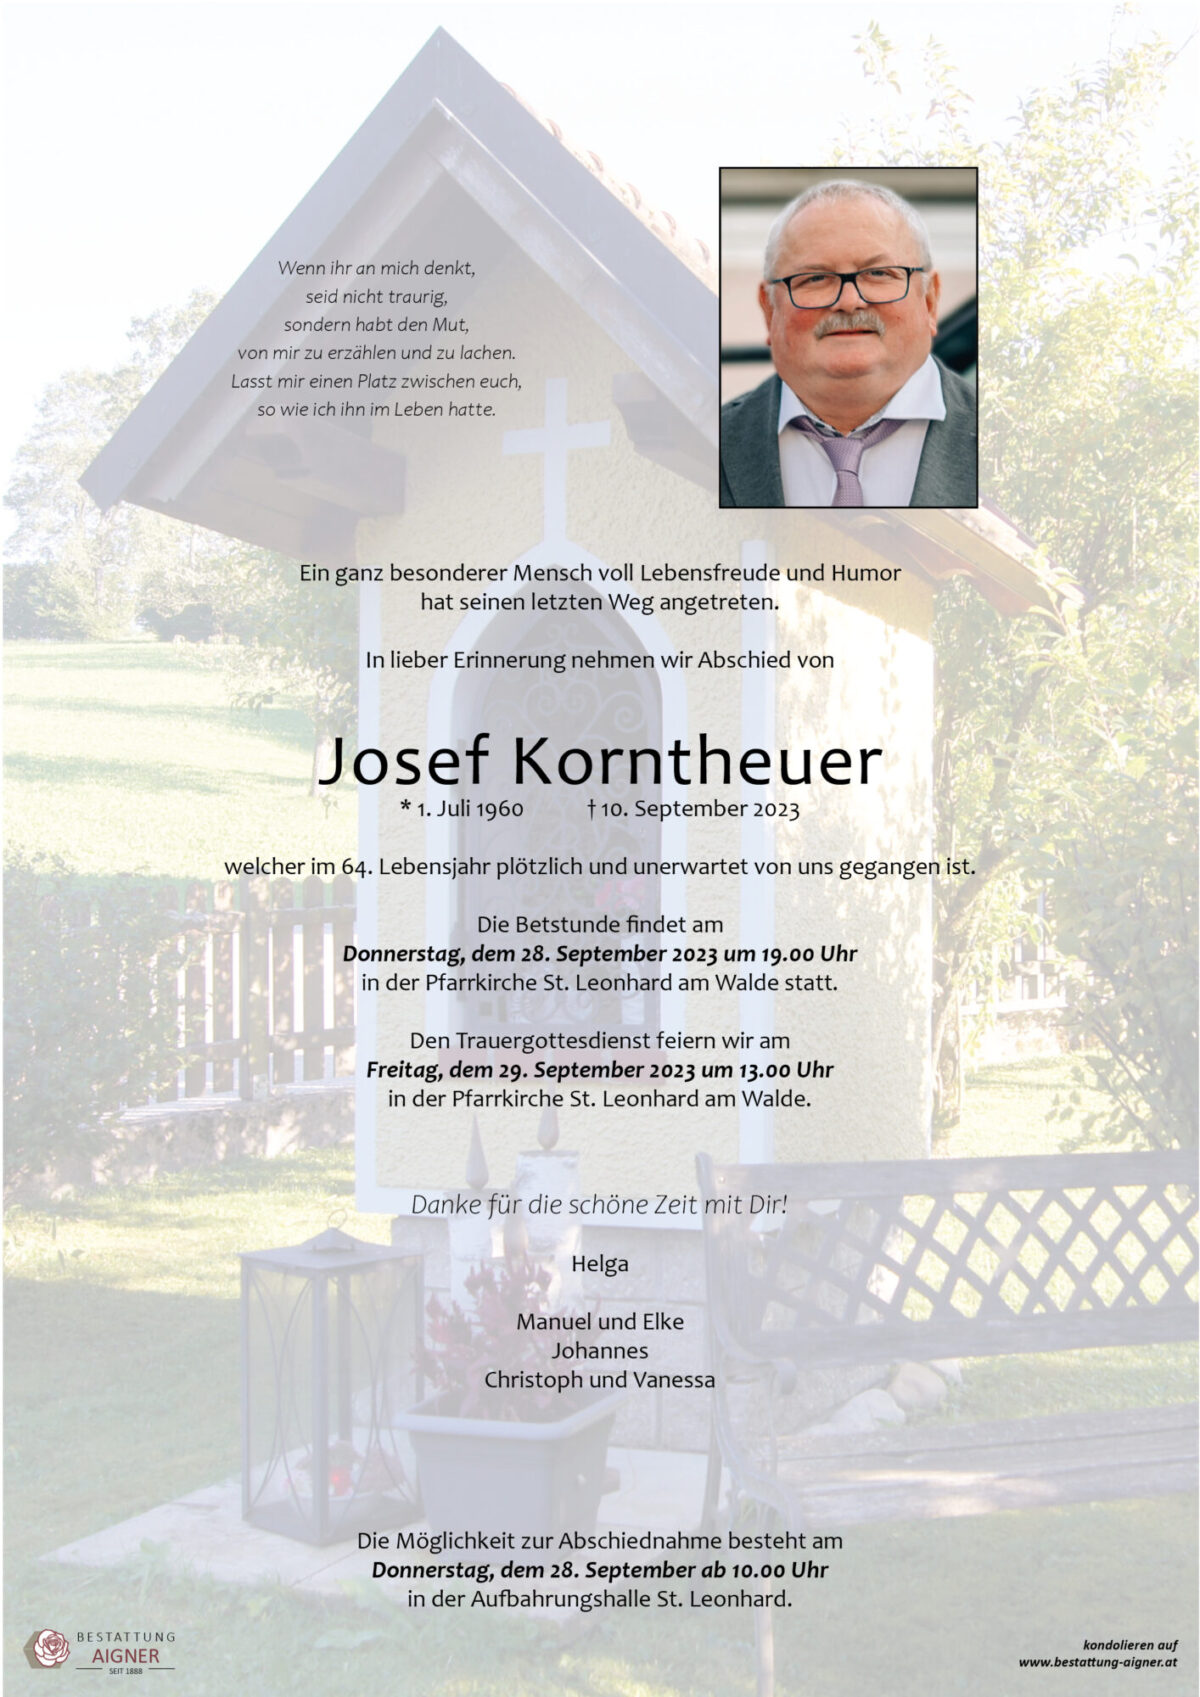 Josef Korntheuer